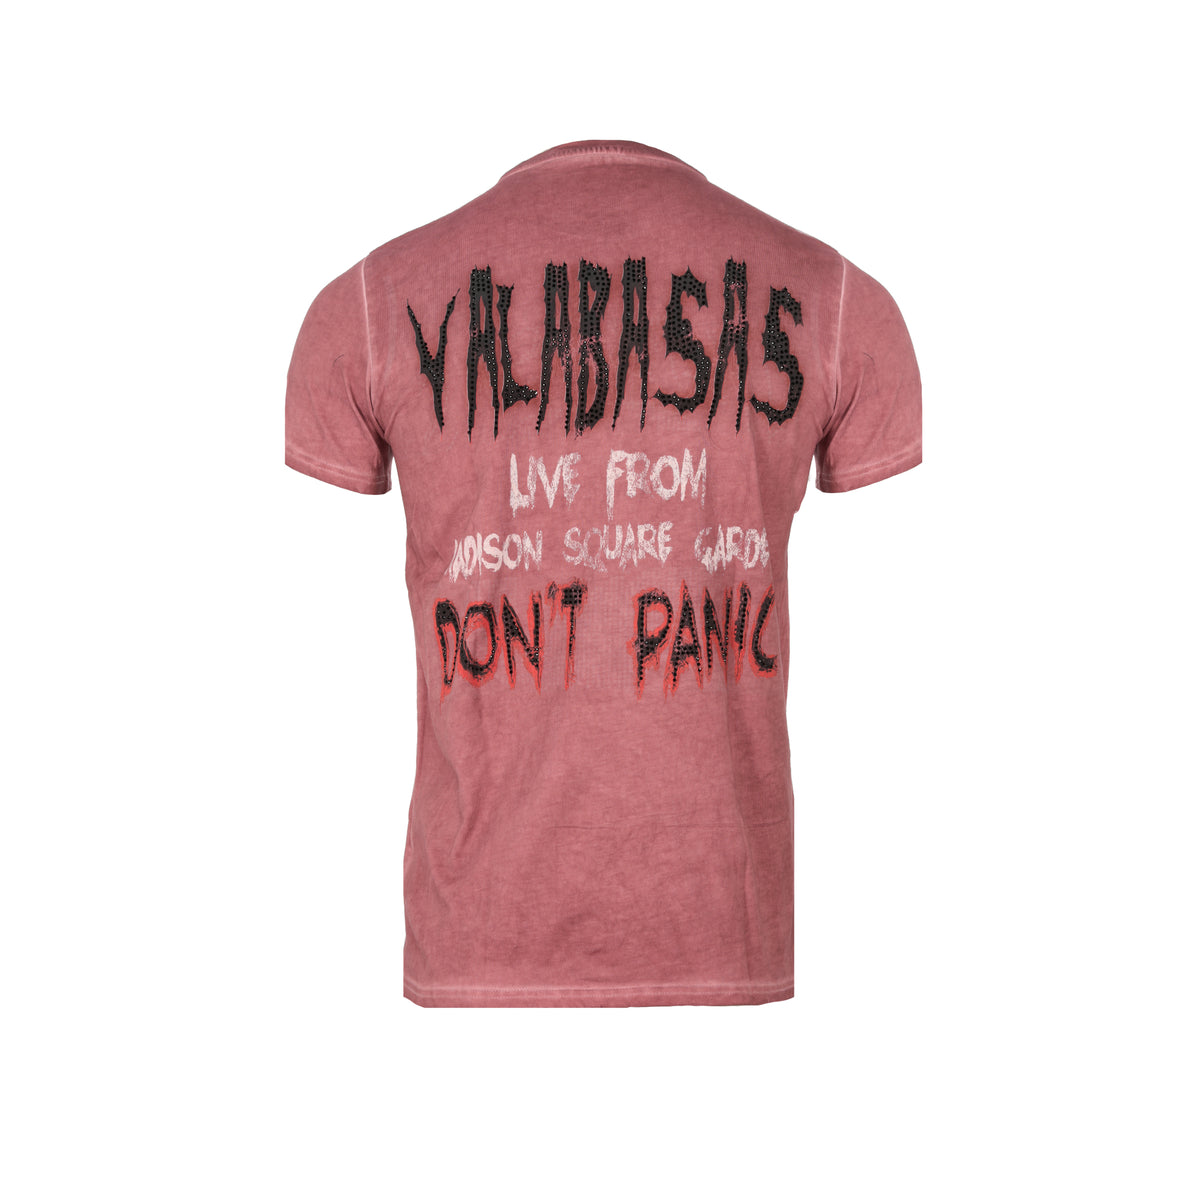 Valabasas "Don't Panic" Men's Graphic SS T-Shirt Vintage Wash Red - SIZE Boutique